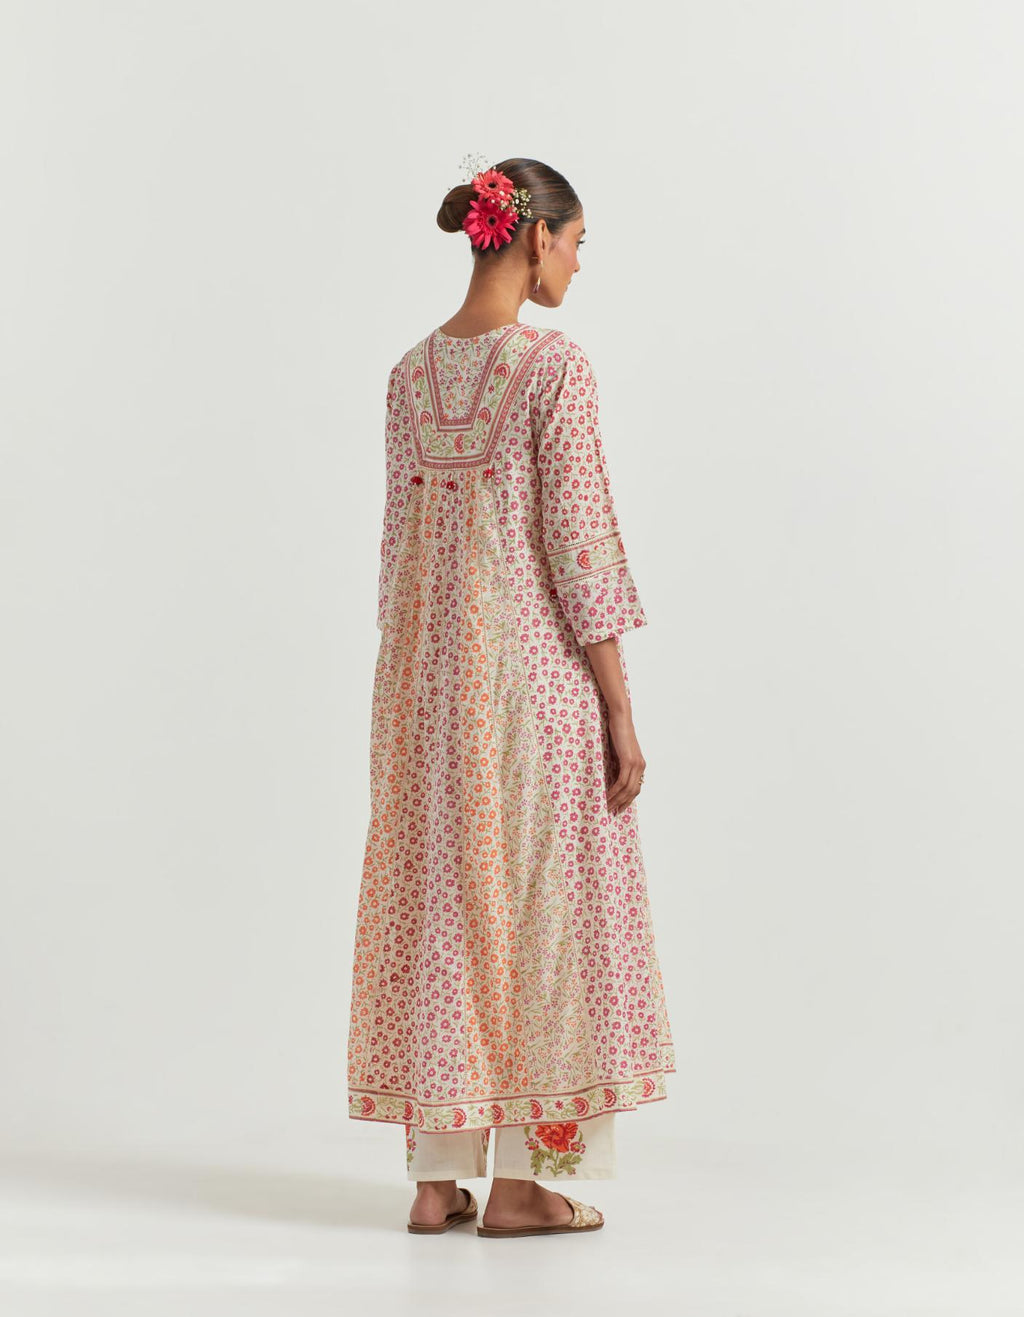 Multi colored hand blcok printed cotton kurta dress set with a V neck, yoke and panels.